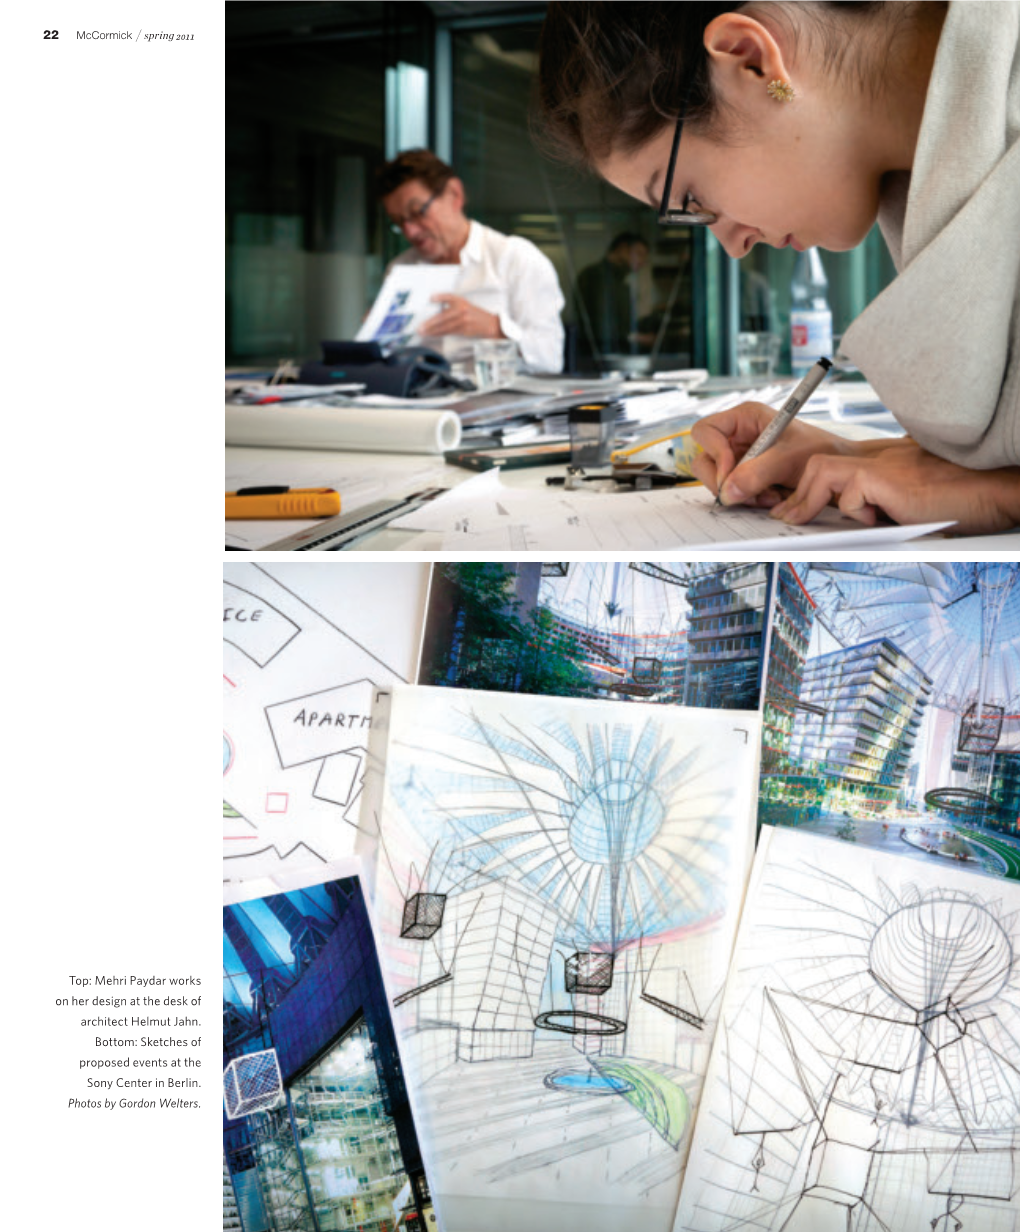 Mehri Paydar Works on Her Design at the Desk of Architect Helmut Jahn